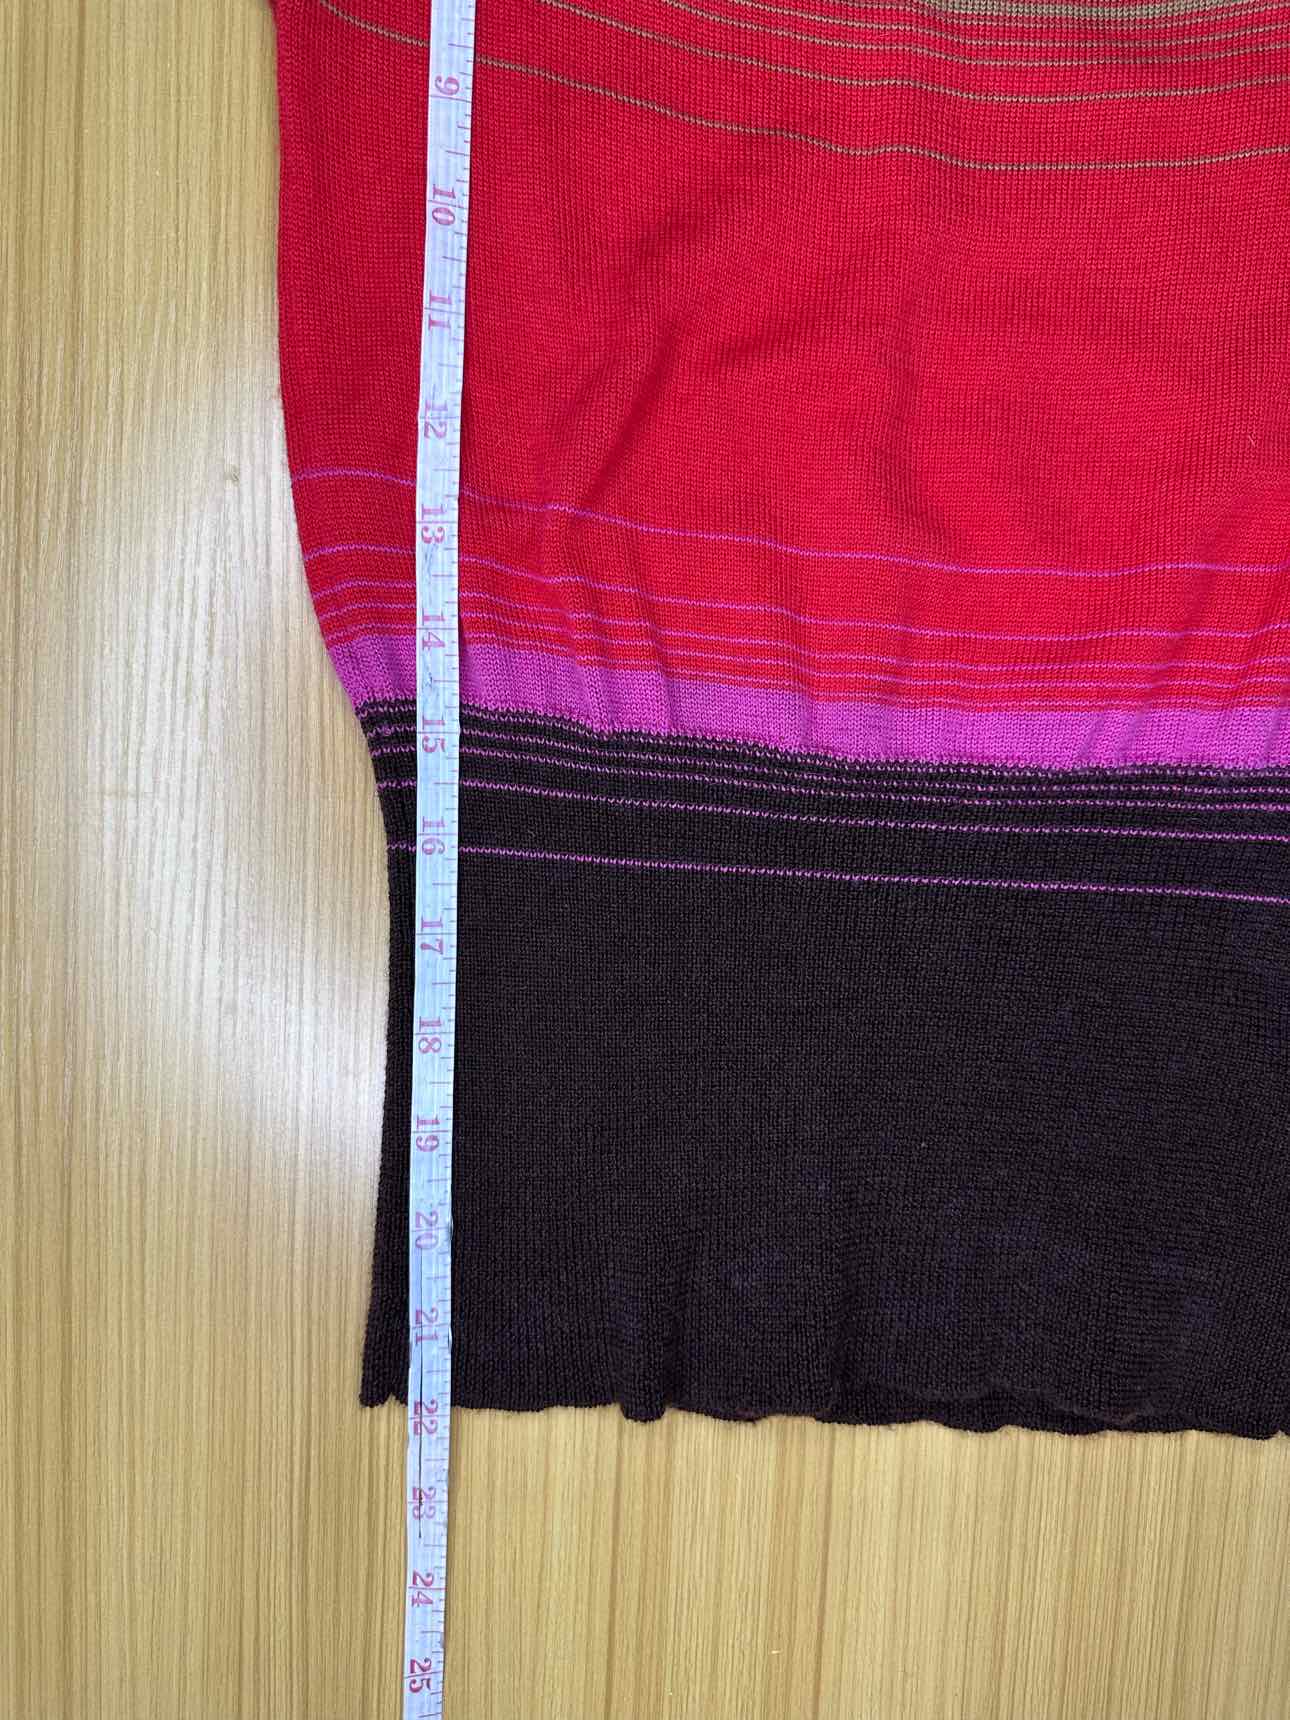 TRINA TURK 100% Wool Sleeveless Sweater Size S